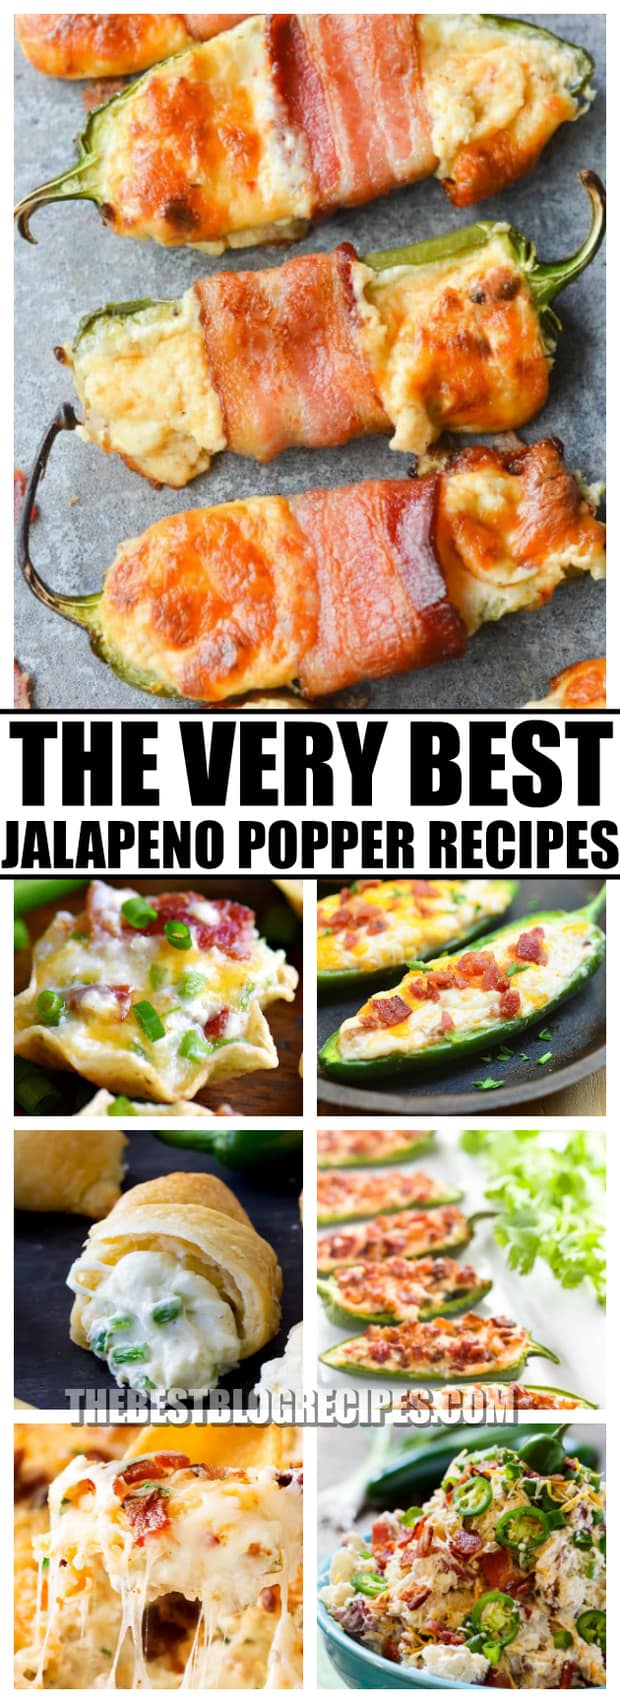 The Best Jalapeno Popper Recipes